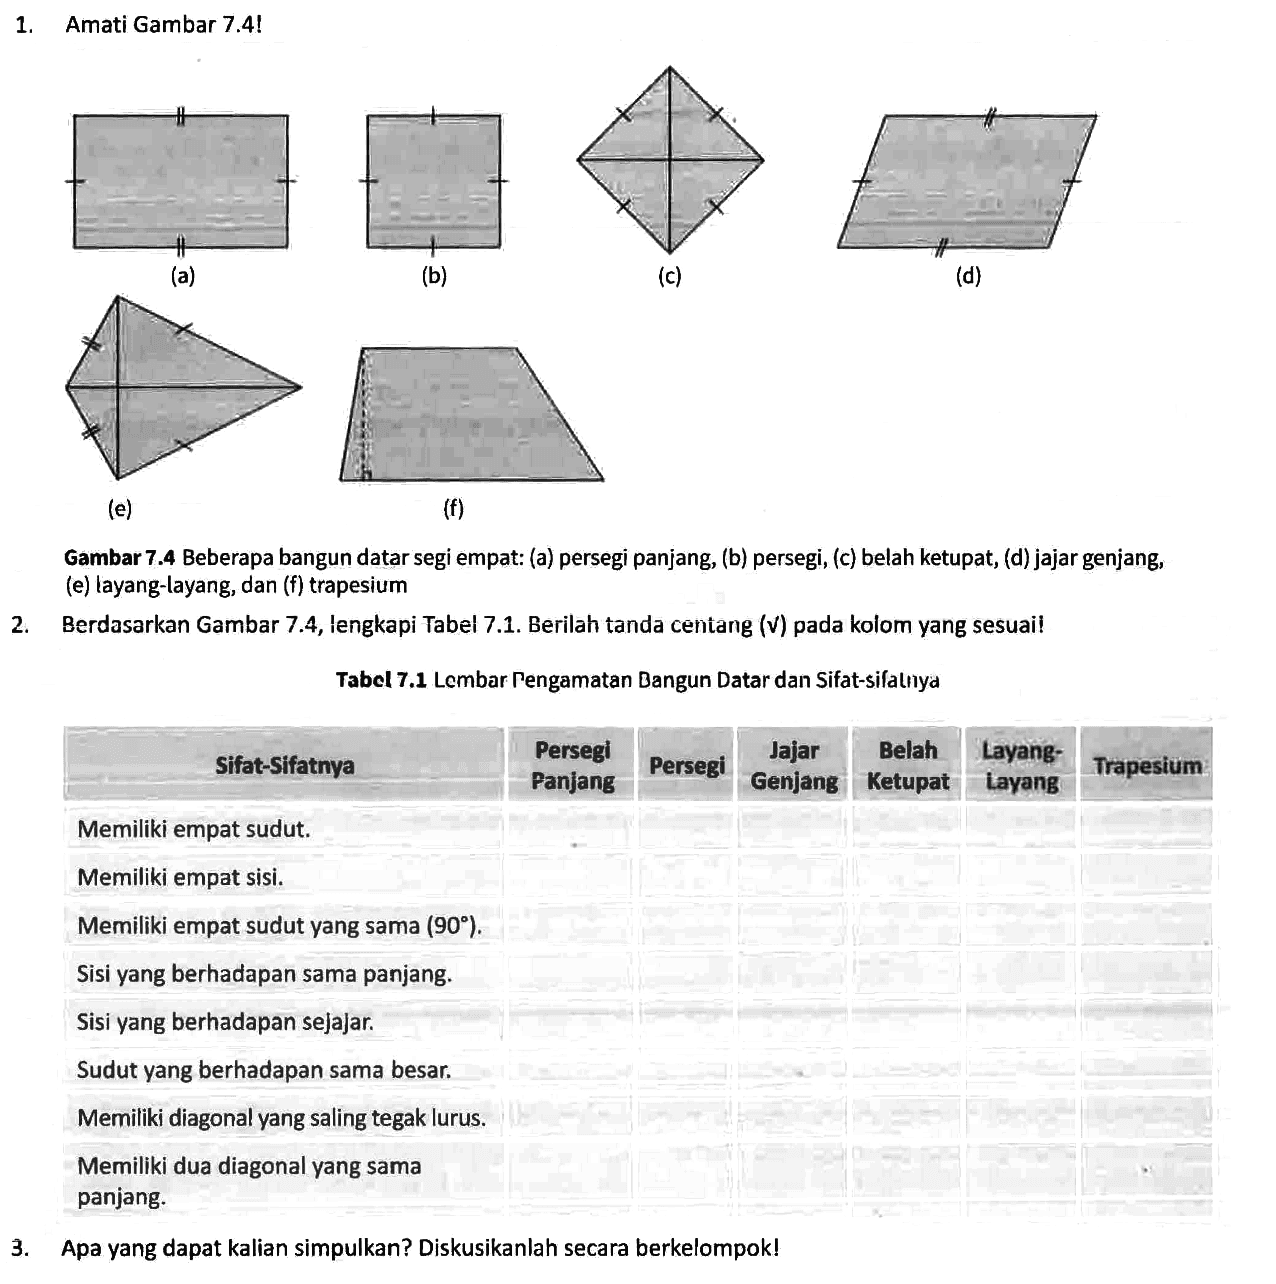 1. Amati Gambar 7.4 ! 
(a)
(b)
(c)
(d)
(e)
(f)
Gambar 7.4 Beberapa bangun datar segi empat: (a) persegi panjang, (b) persegi, (c) belah ketupat, (d) jajar genjang, (e) layang-layang, dan (f) trapesium
2. Berdasarkan Gambar 7.4, lengkapi Tabel 7.1. Berilah tanda centang (V) pada kolom yang sesuai!
Tabel 7.1 Lembar Pengamatan Bangun Datar dan Sifat-sifatnya

Sifat-Sifatnya  Persegi Panjang Persegi  Jajar Genjang  Belah Ketupat  Layang-layang  Trapesium
Memiliki empat sudut.
Memiliki empat sisi.
Memiliki empat sudut yang sama (90).
Sisi yang berhadapan sama panjang.
Sisi yang berhadapan sejajar.
Sudut yang berhadapan sama besar.
Memiliki diagonal yang saling tegak lurus.
Memiliki dua diagonal yang sama panjang.

3. Apa yang dapat kalian simpulkan? Diskusikanlah secara berkelompok!